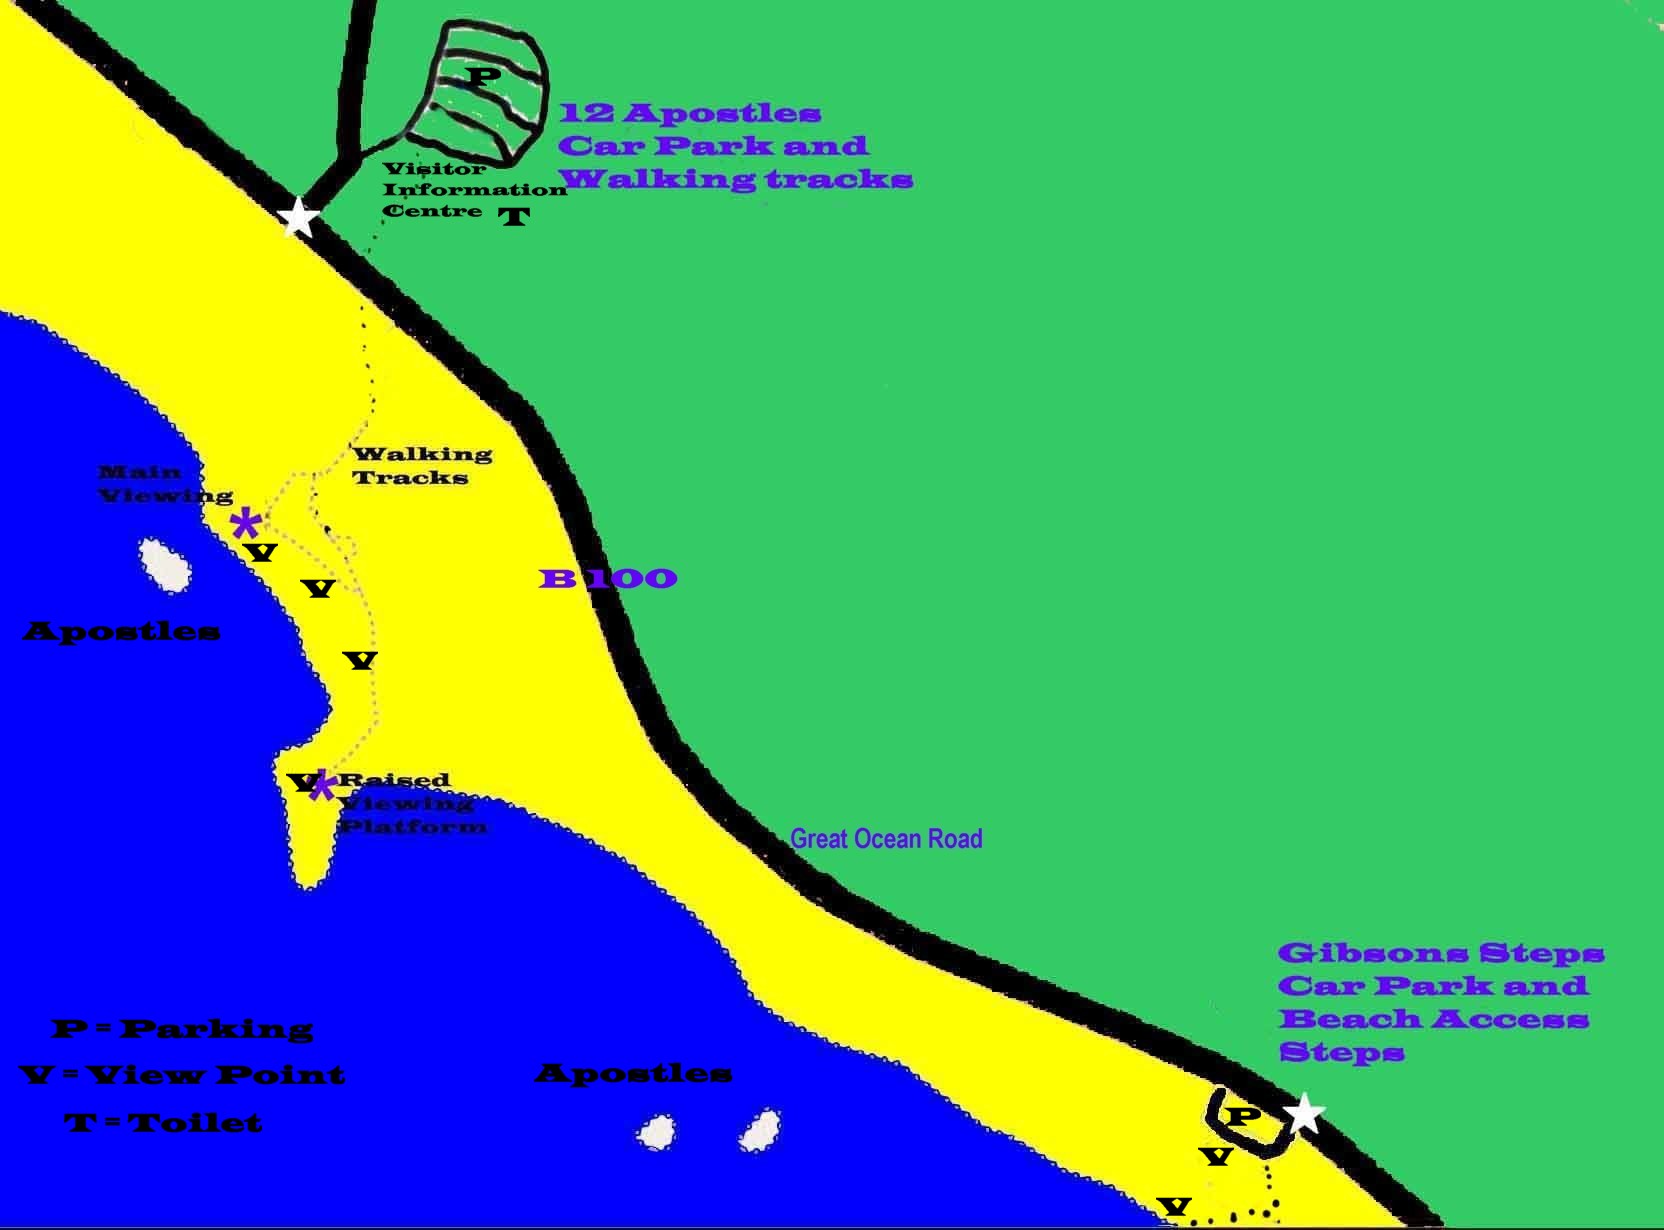 Great Ocean Road Map Twelve
            Apostles